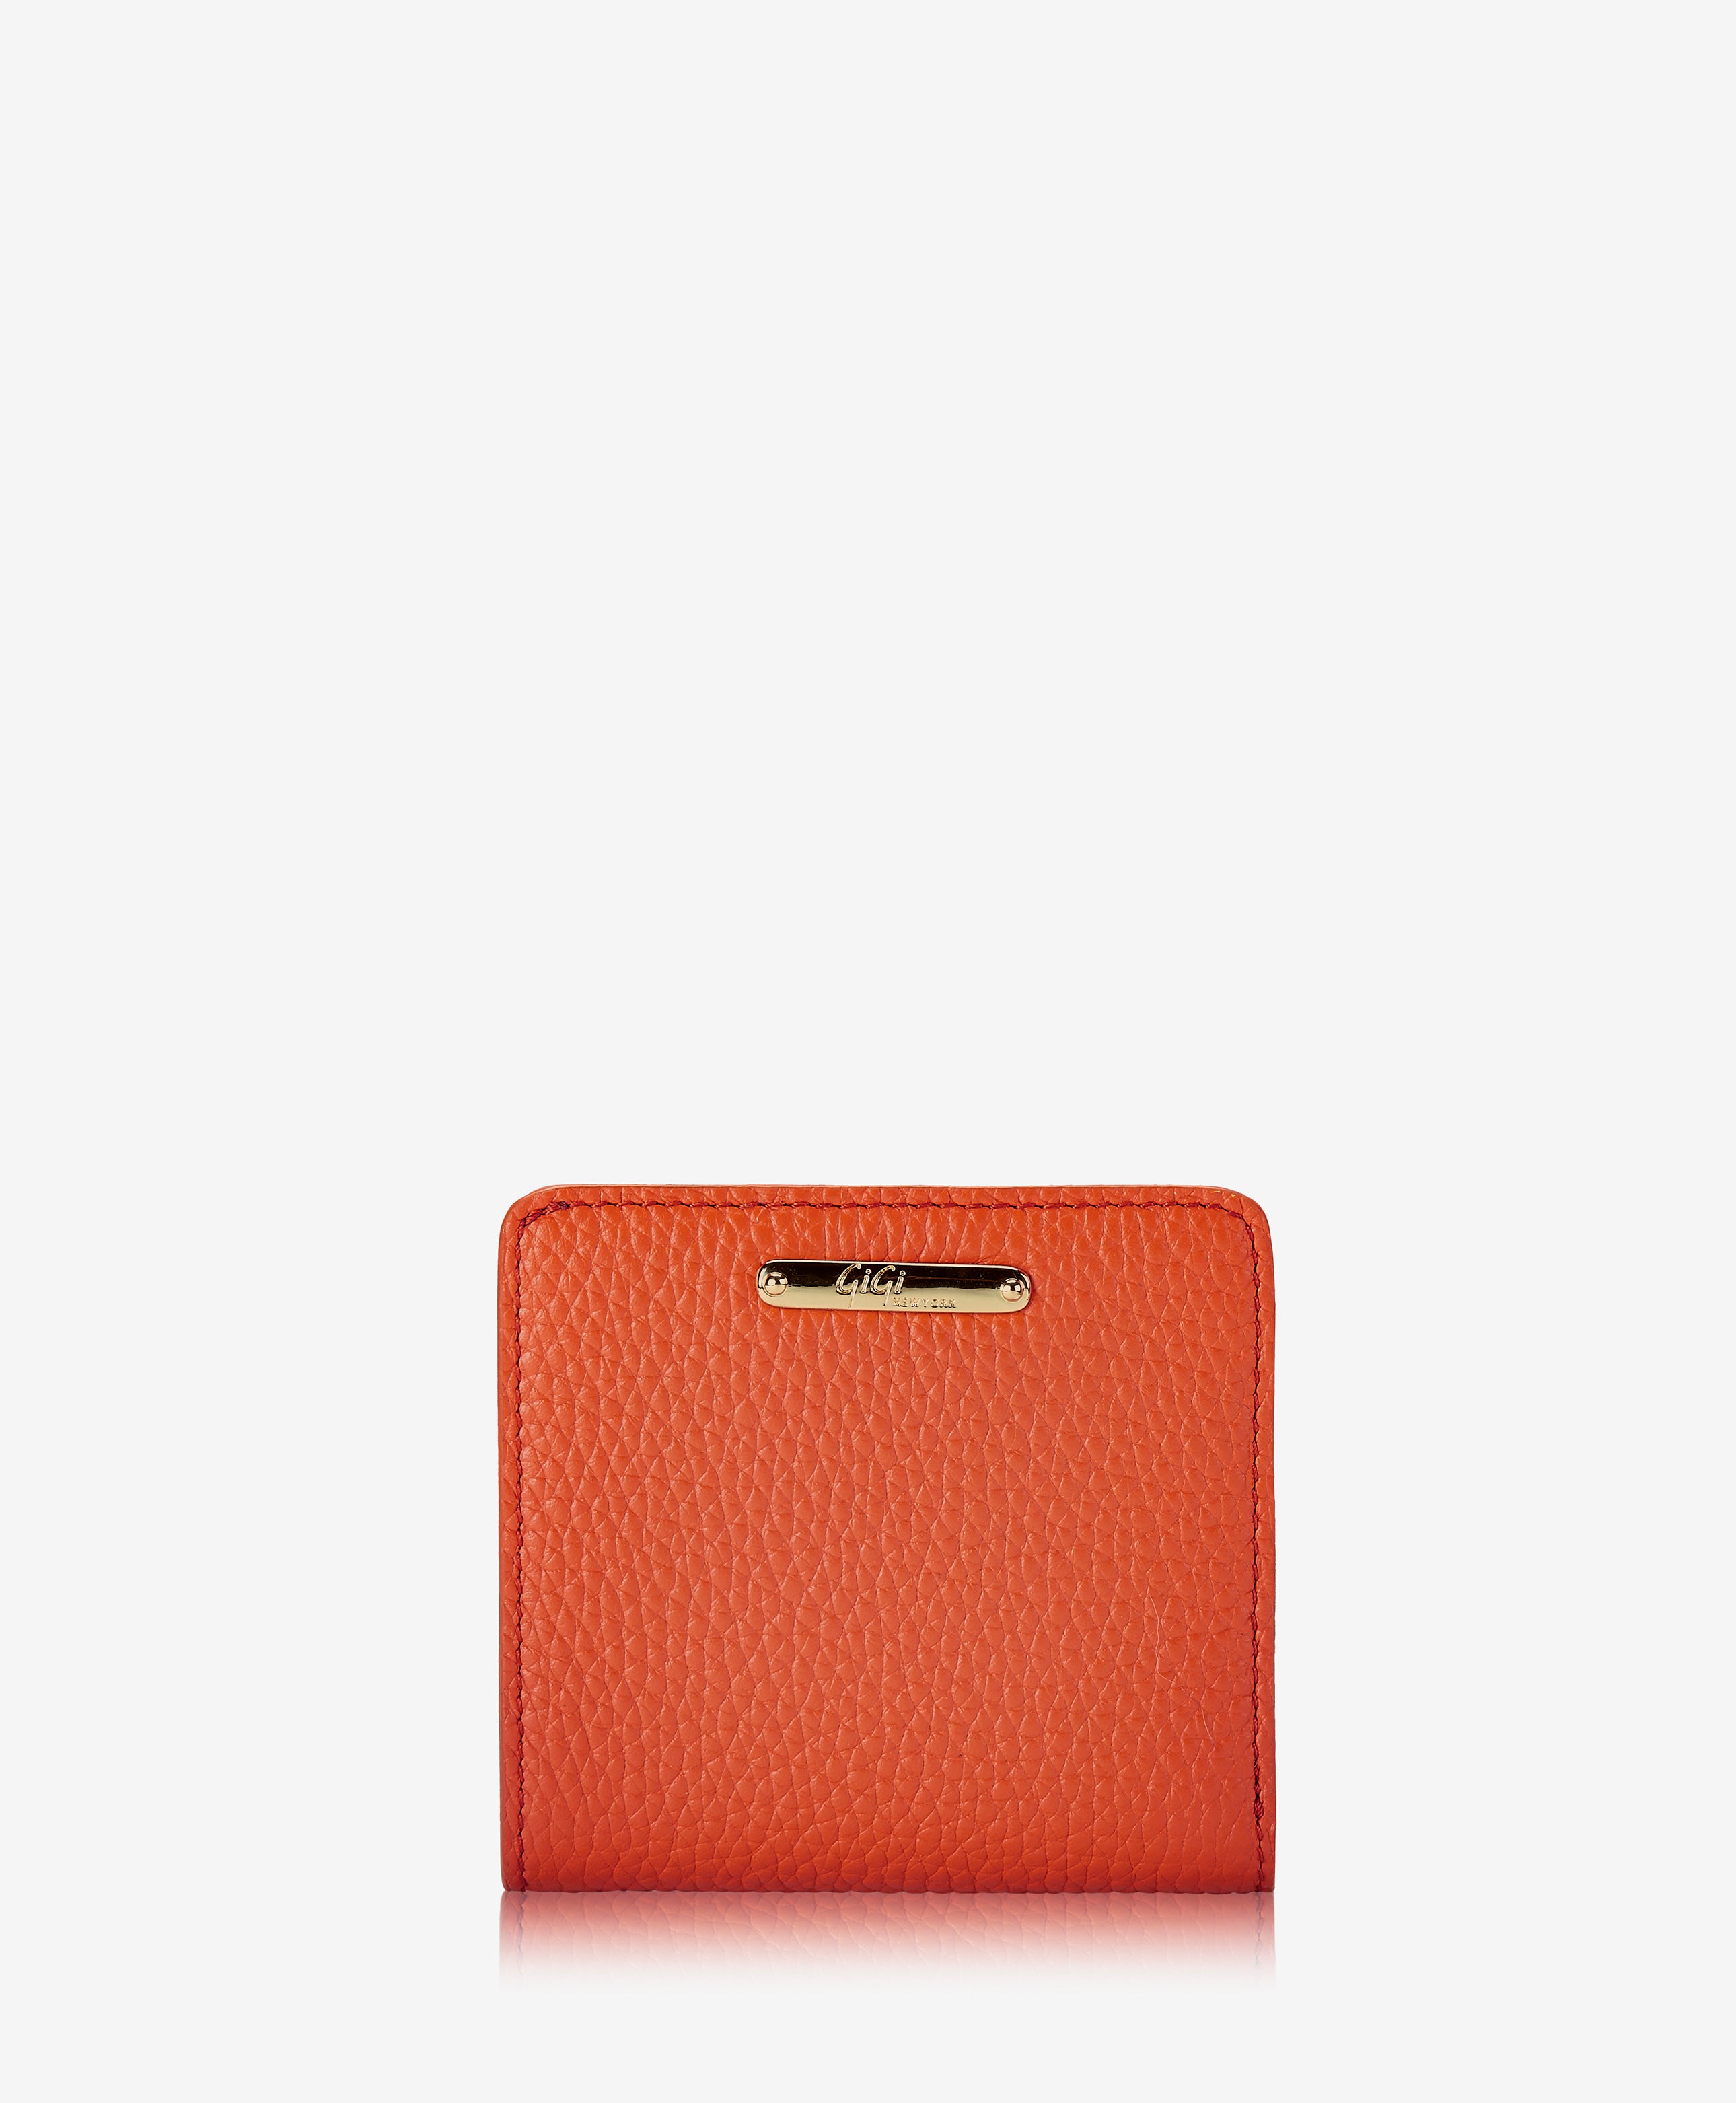 GiGi New York Mini Foldover Wallet Orange Pebble Grain Leather